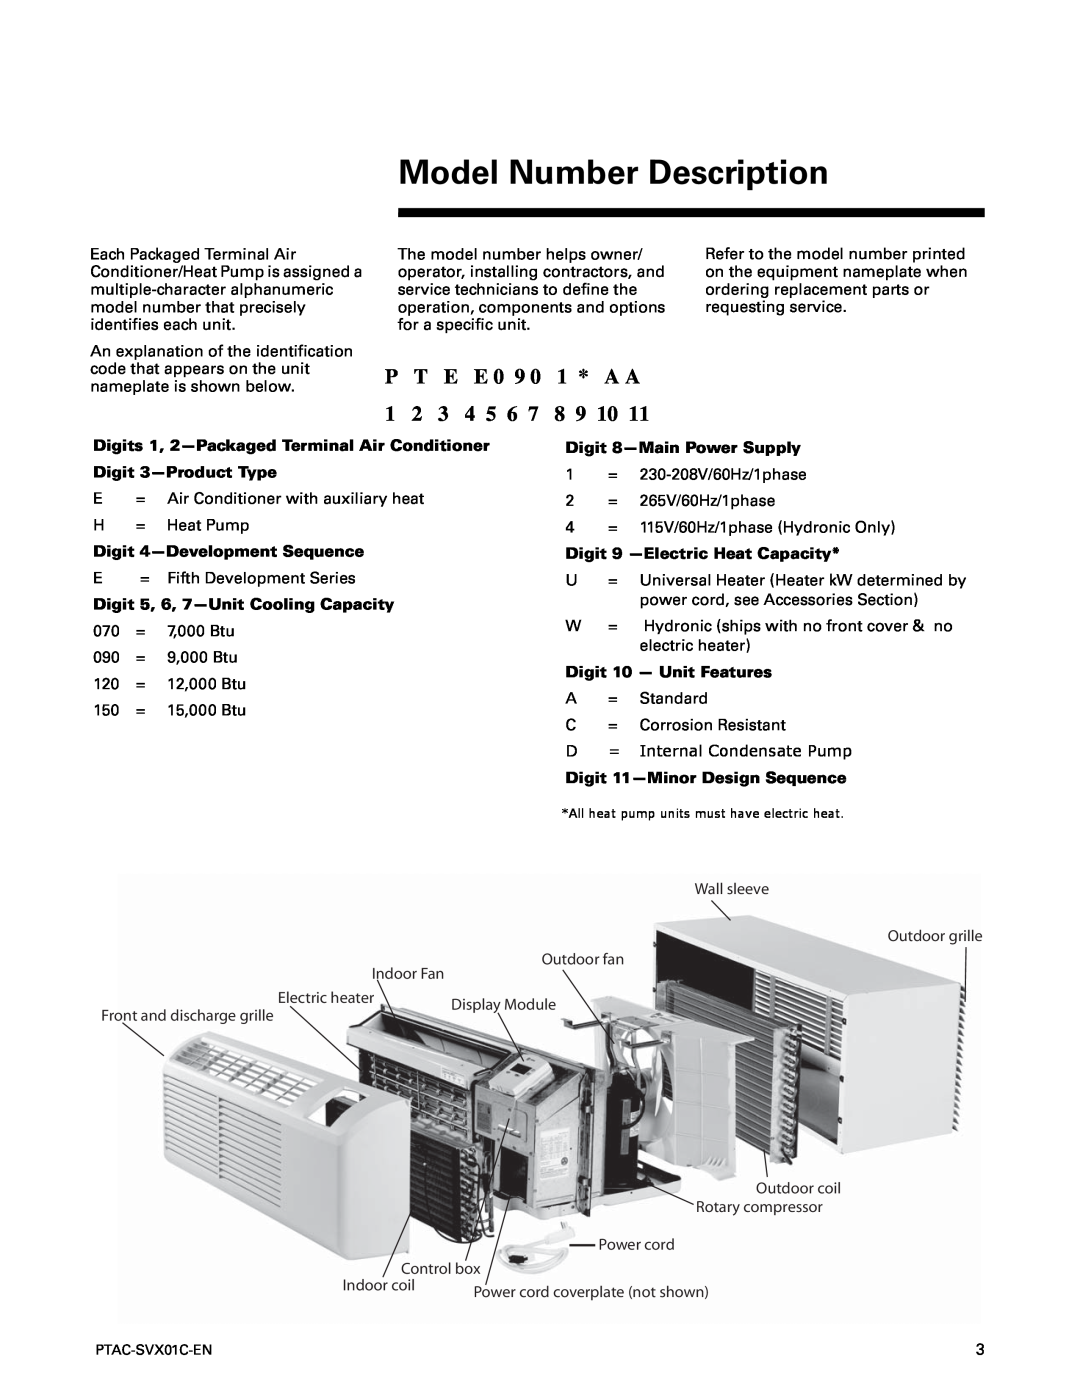 Trane PTAC-SVX01C-EN manual Model Number Description, P T E E 0 9 0 1 * A A, 4 5 6, 8 9 10, Indoor Fan, Electric heater 